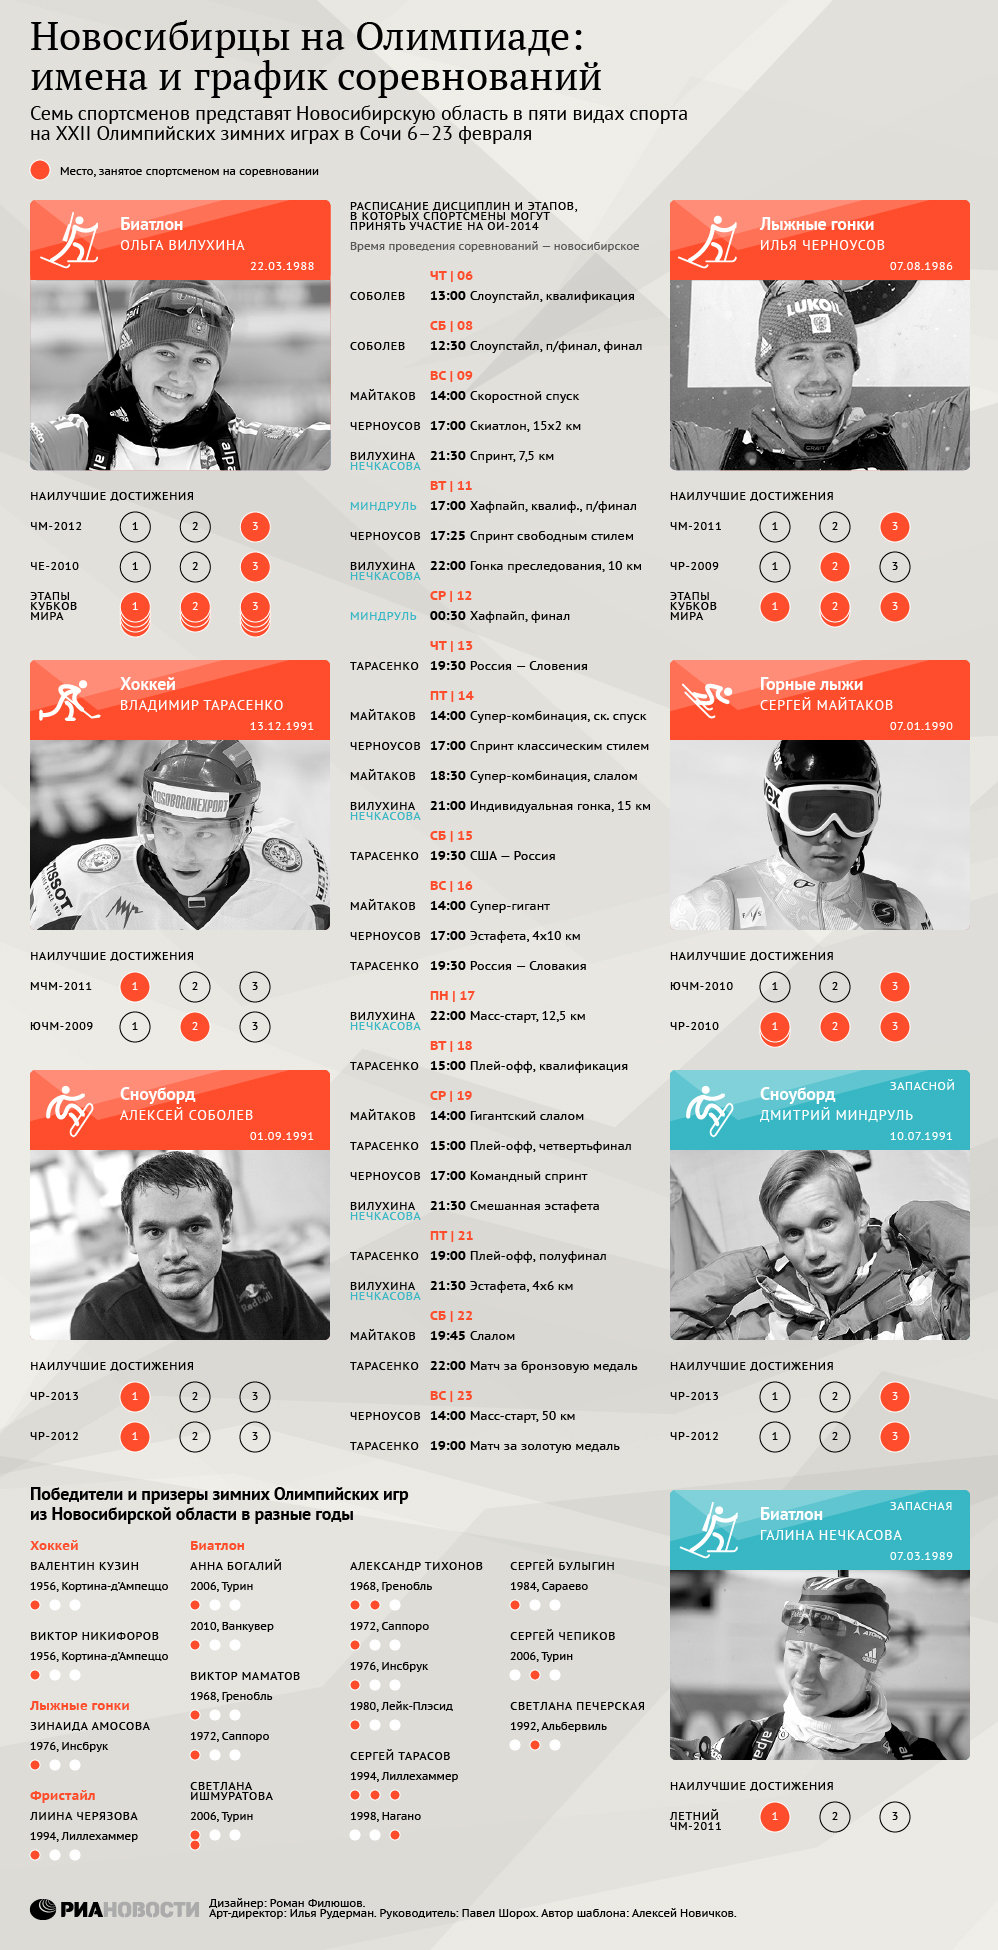 Новосибирцы на Олимпиаде – имена и график соревнований